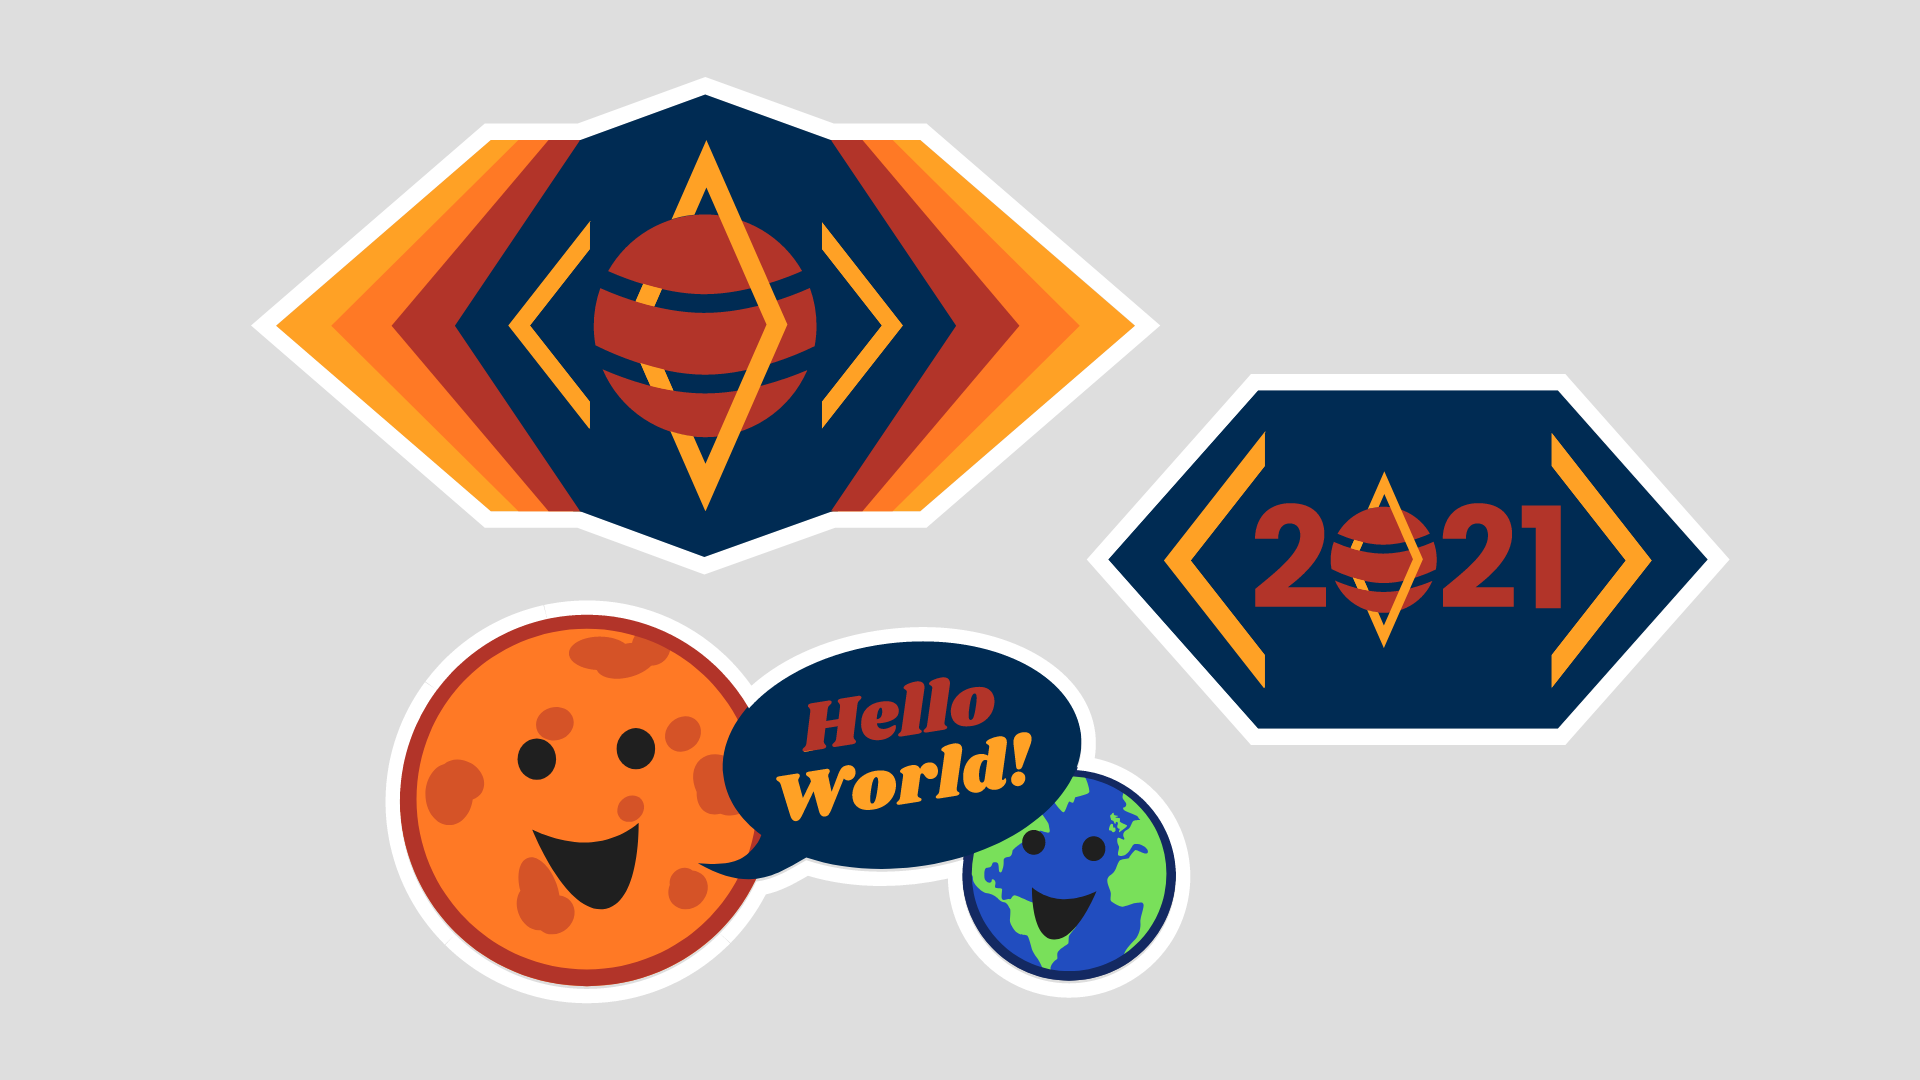 Hello world hack 2021 stickers